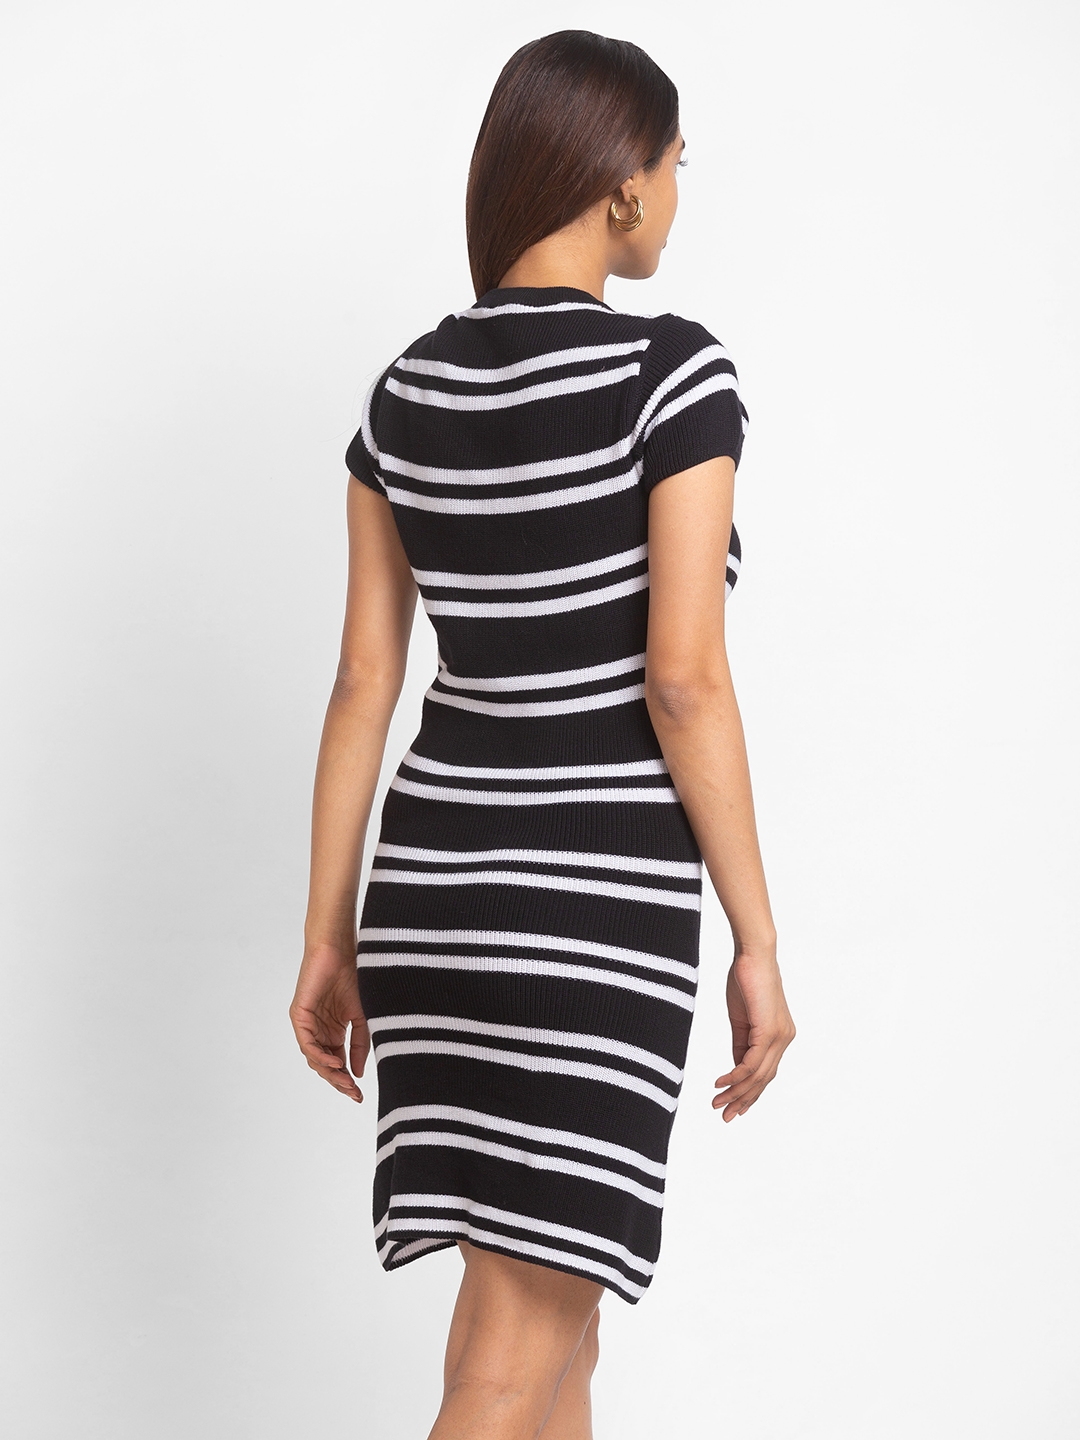 Globus Black Striped Bodycon Dress